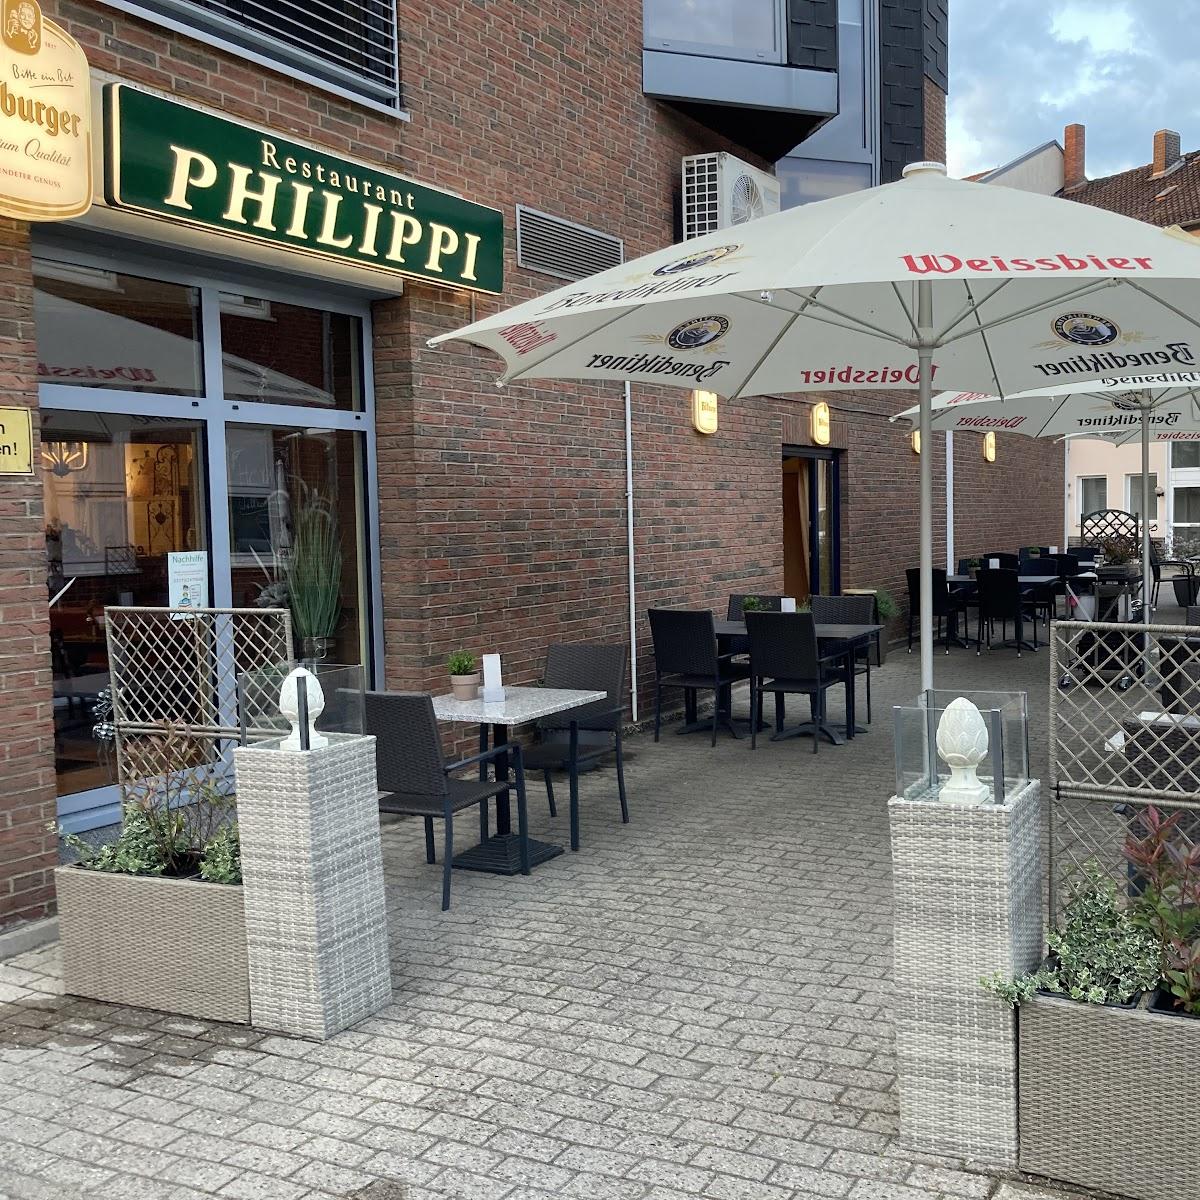 Restaurant "Restaurant Philippi" in Lehrte